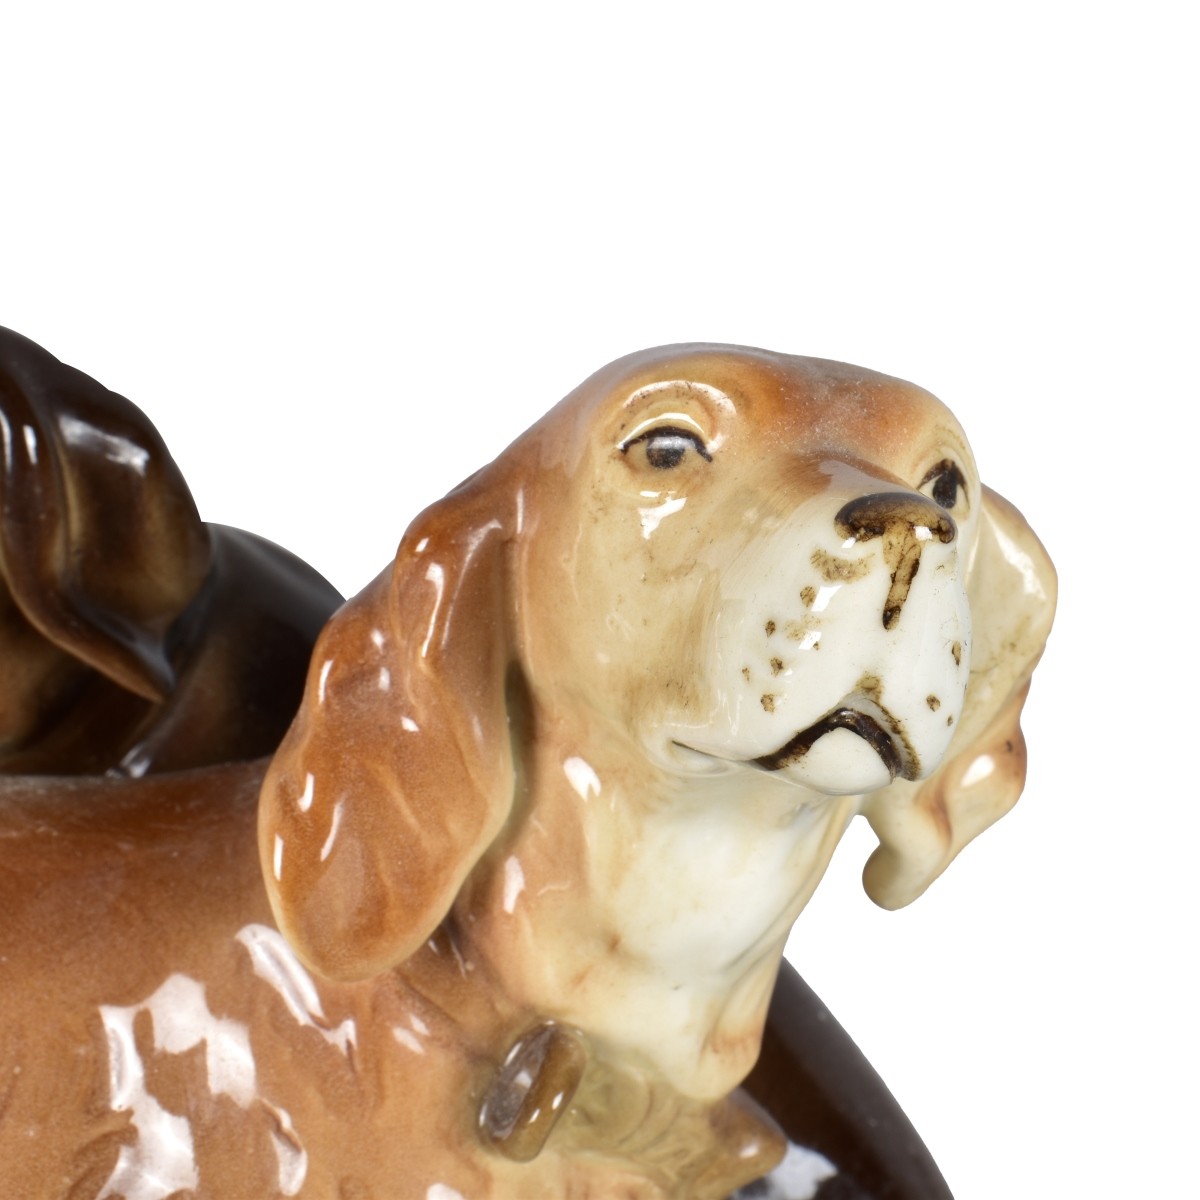 Royal Dux Hunting Dogs Figurine